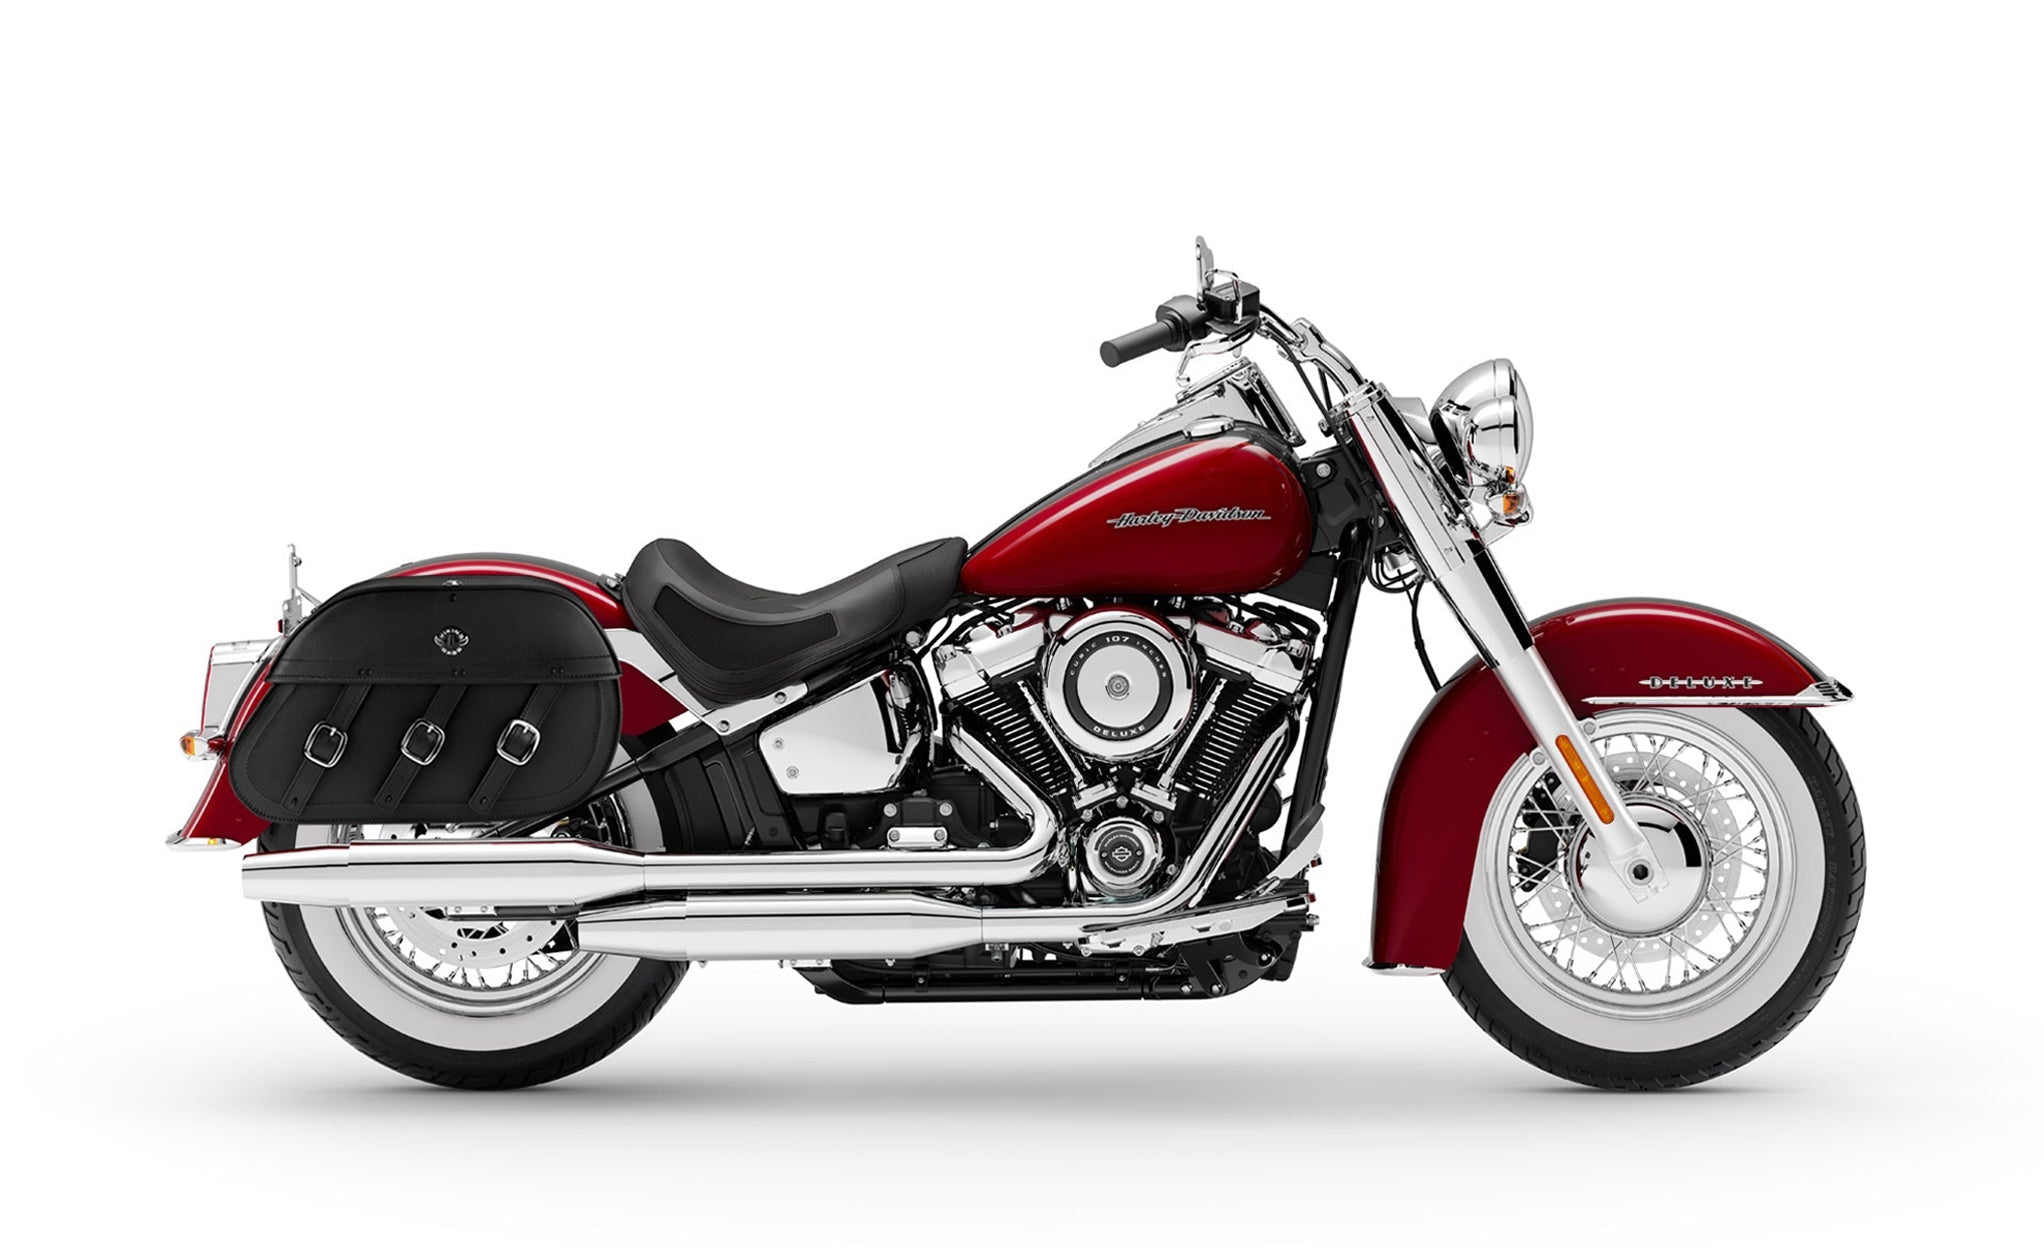 Viking Trianon Extra Large Leather Motorcycle Saddlebags For Harley Softail Deluxe Flstn I on Bike Photo @expand